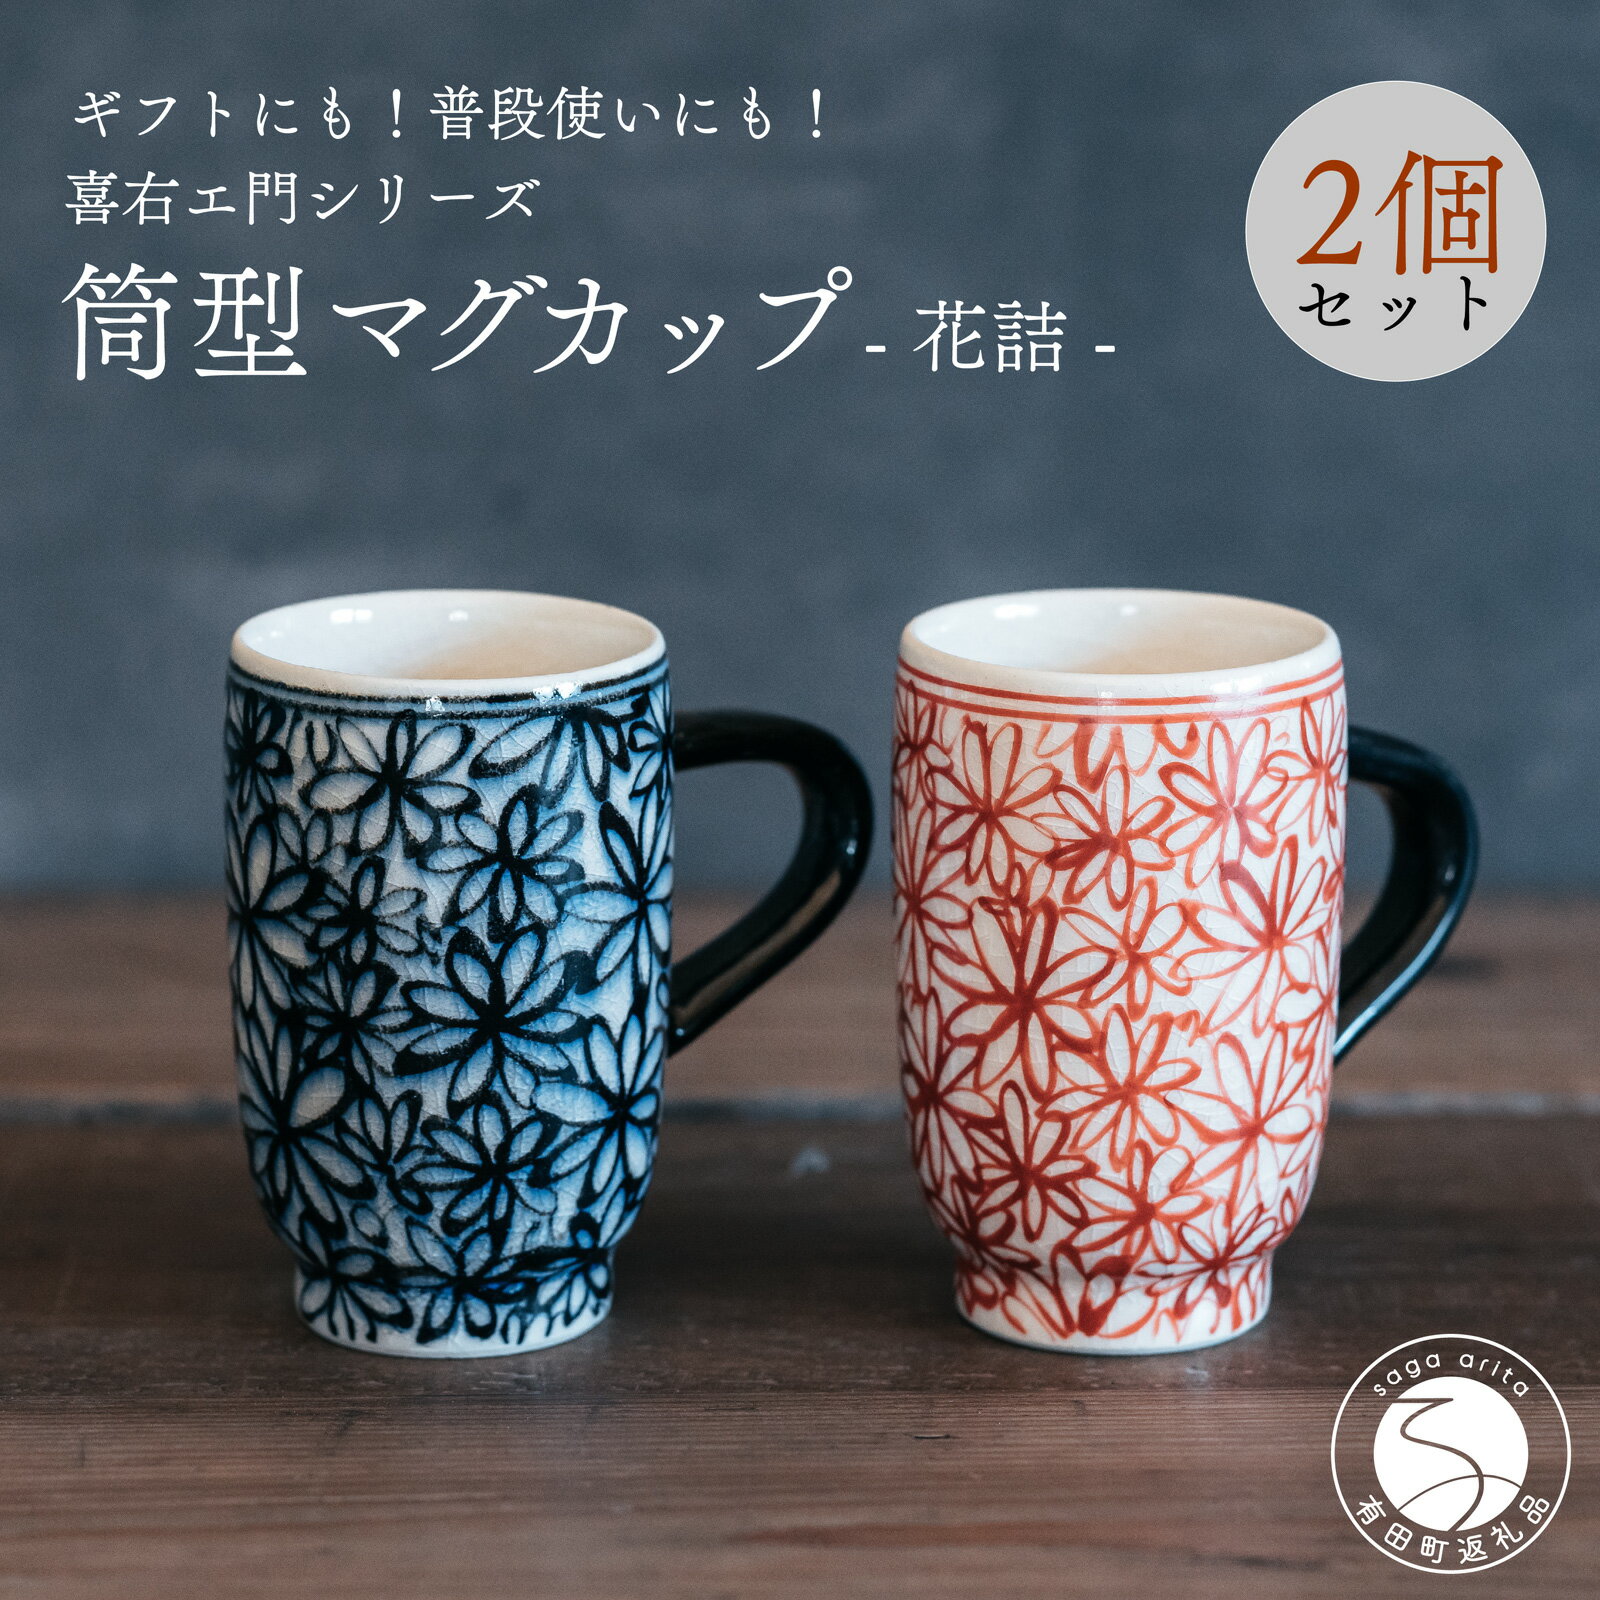 A30-409喜鶴製陶[有田焼]筒型マグカップ 花詰 ペアセット 喜右エ門シリーズ